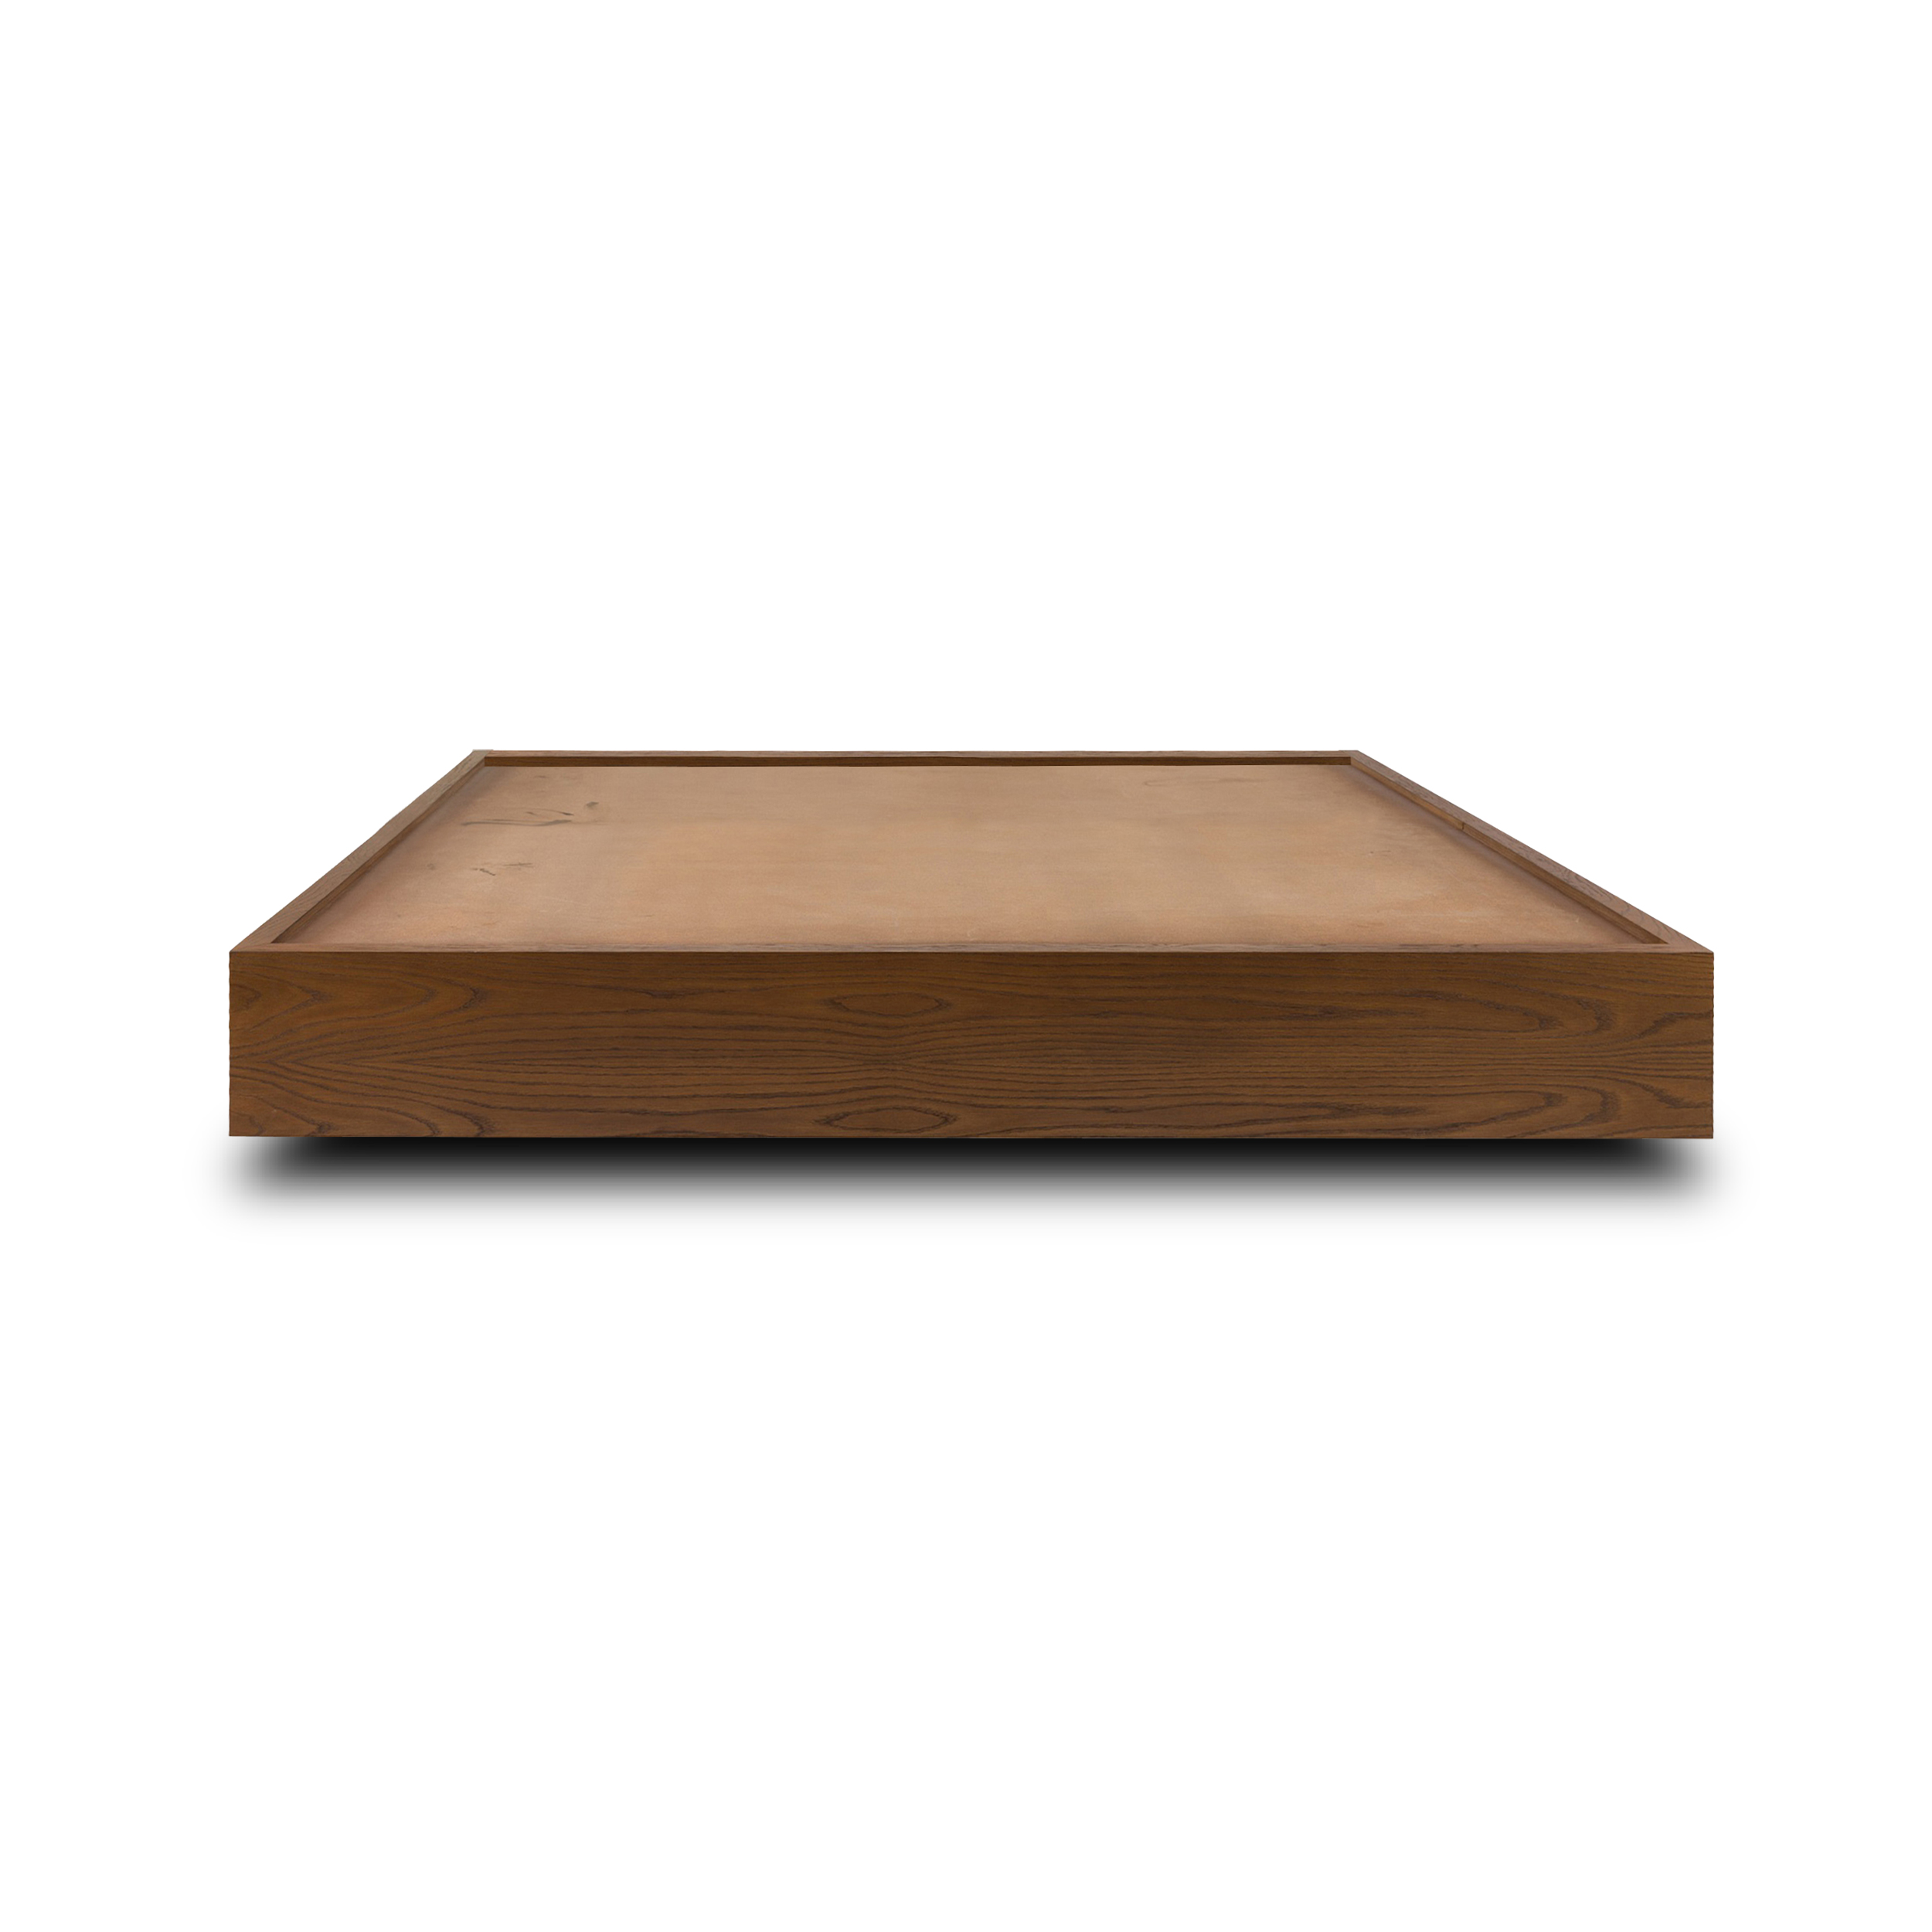 Base de cama de madera - Mueblex